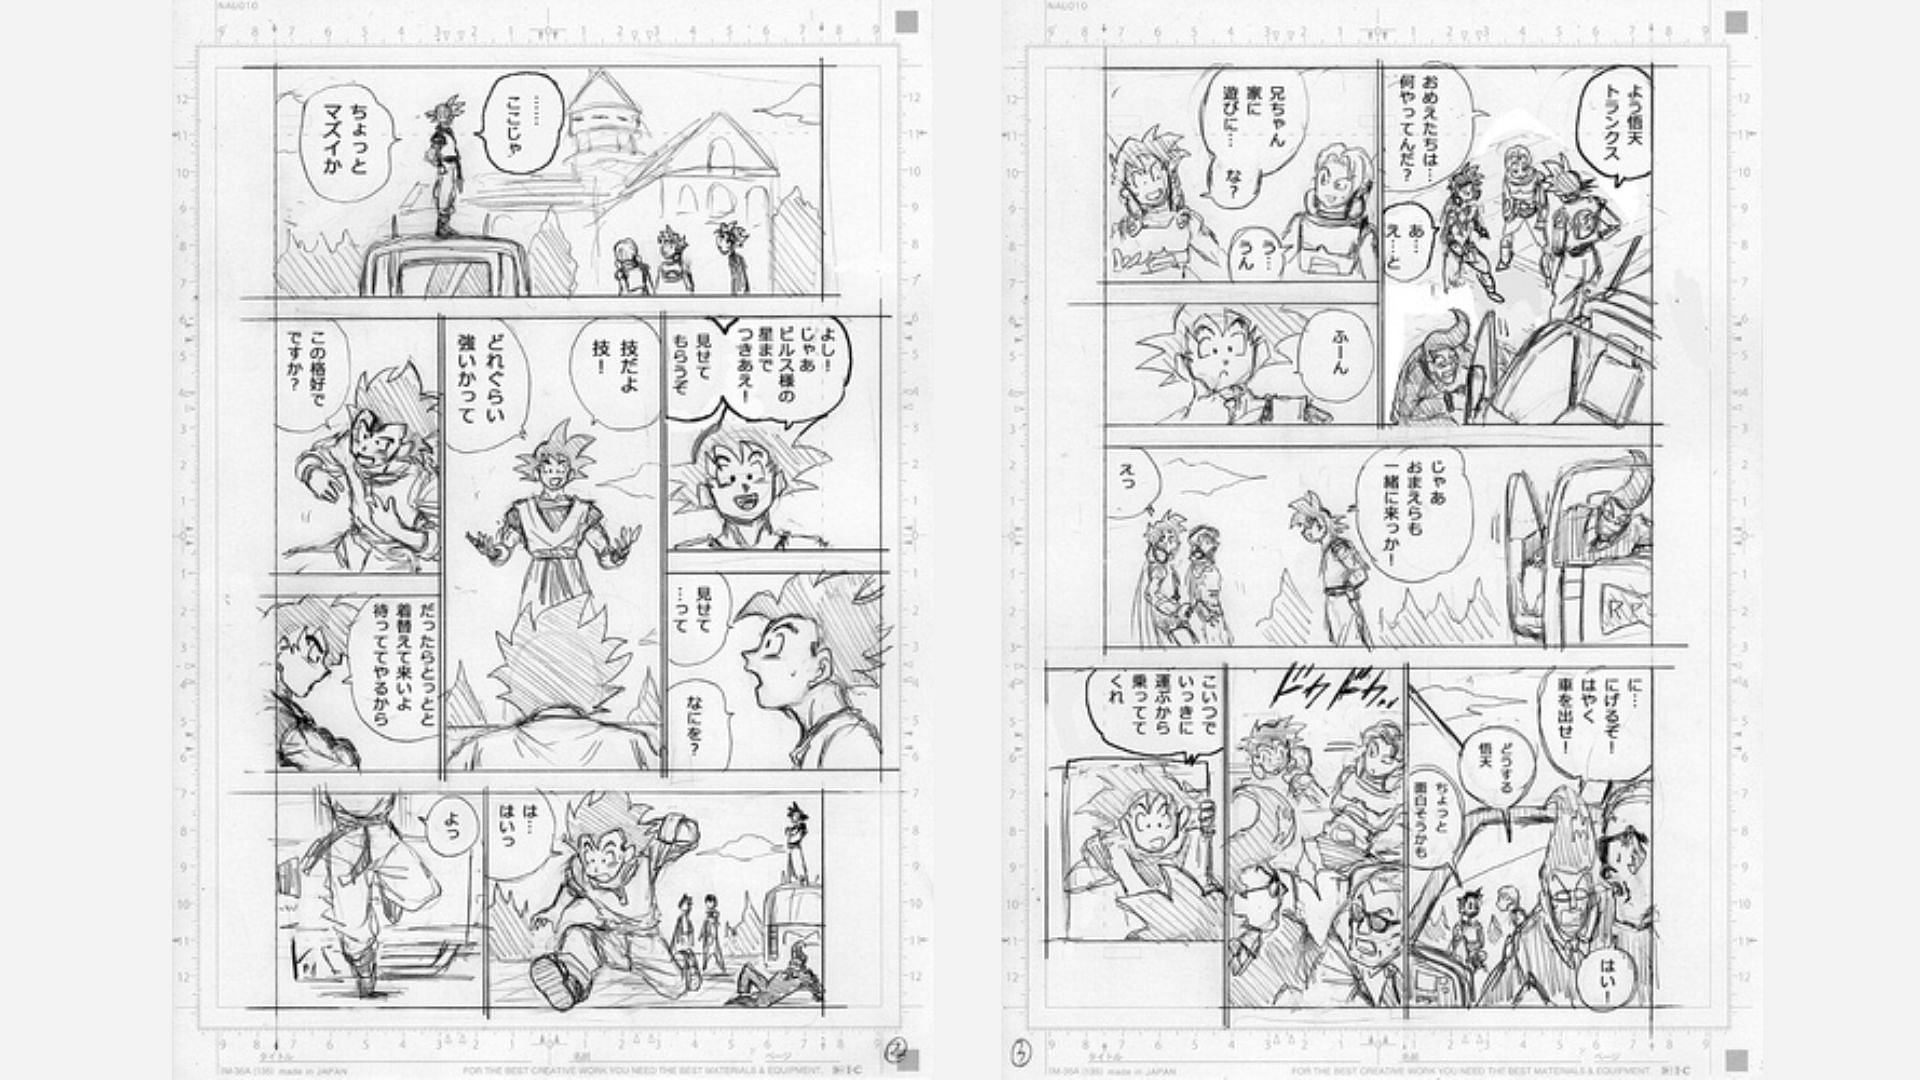 Sneak-Peek images from Dragon Ball Super chapter 102 storyboard (Image via Shueisha)